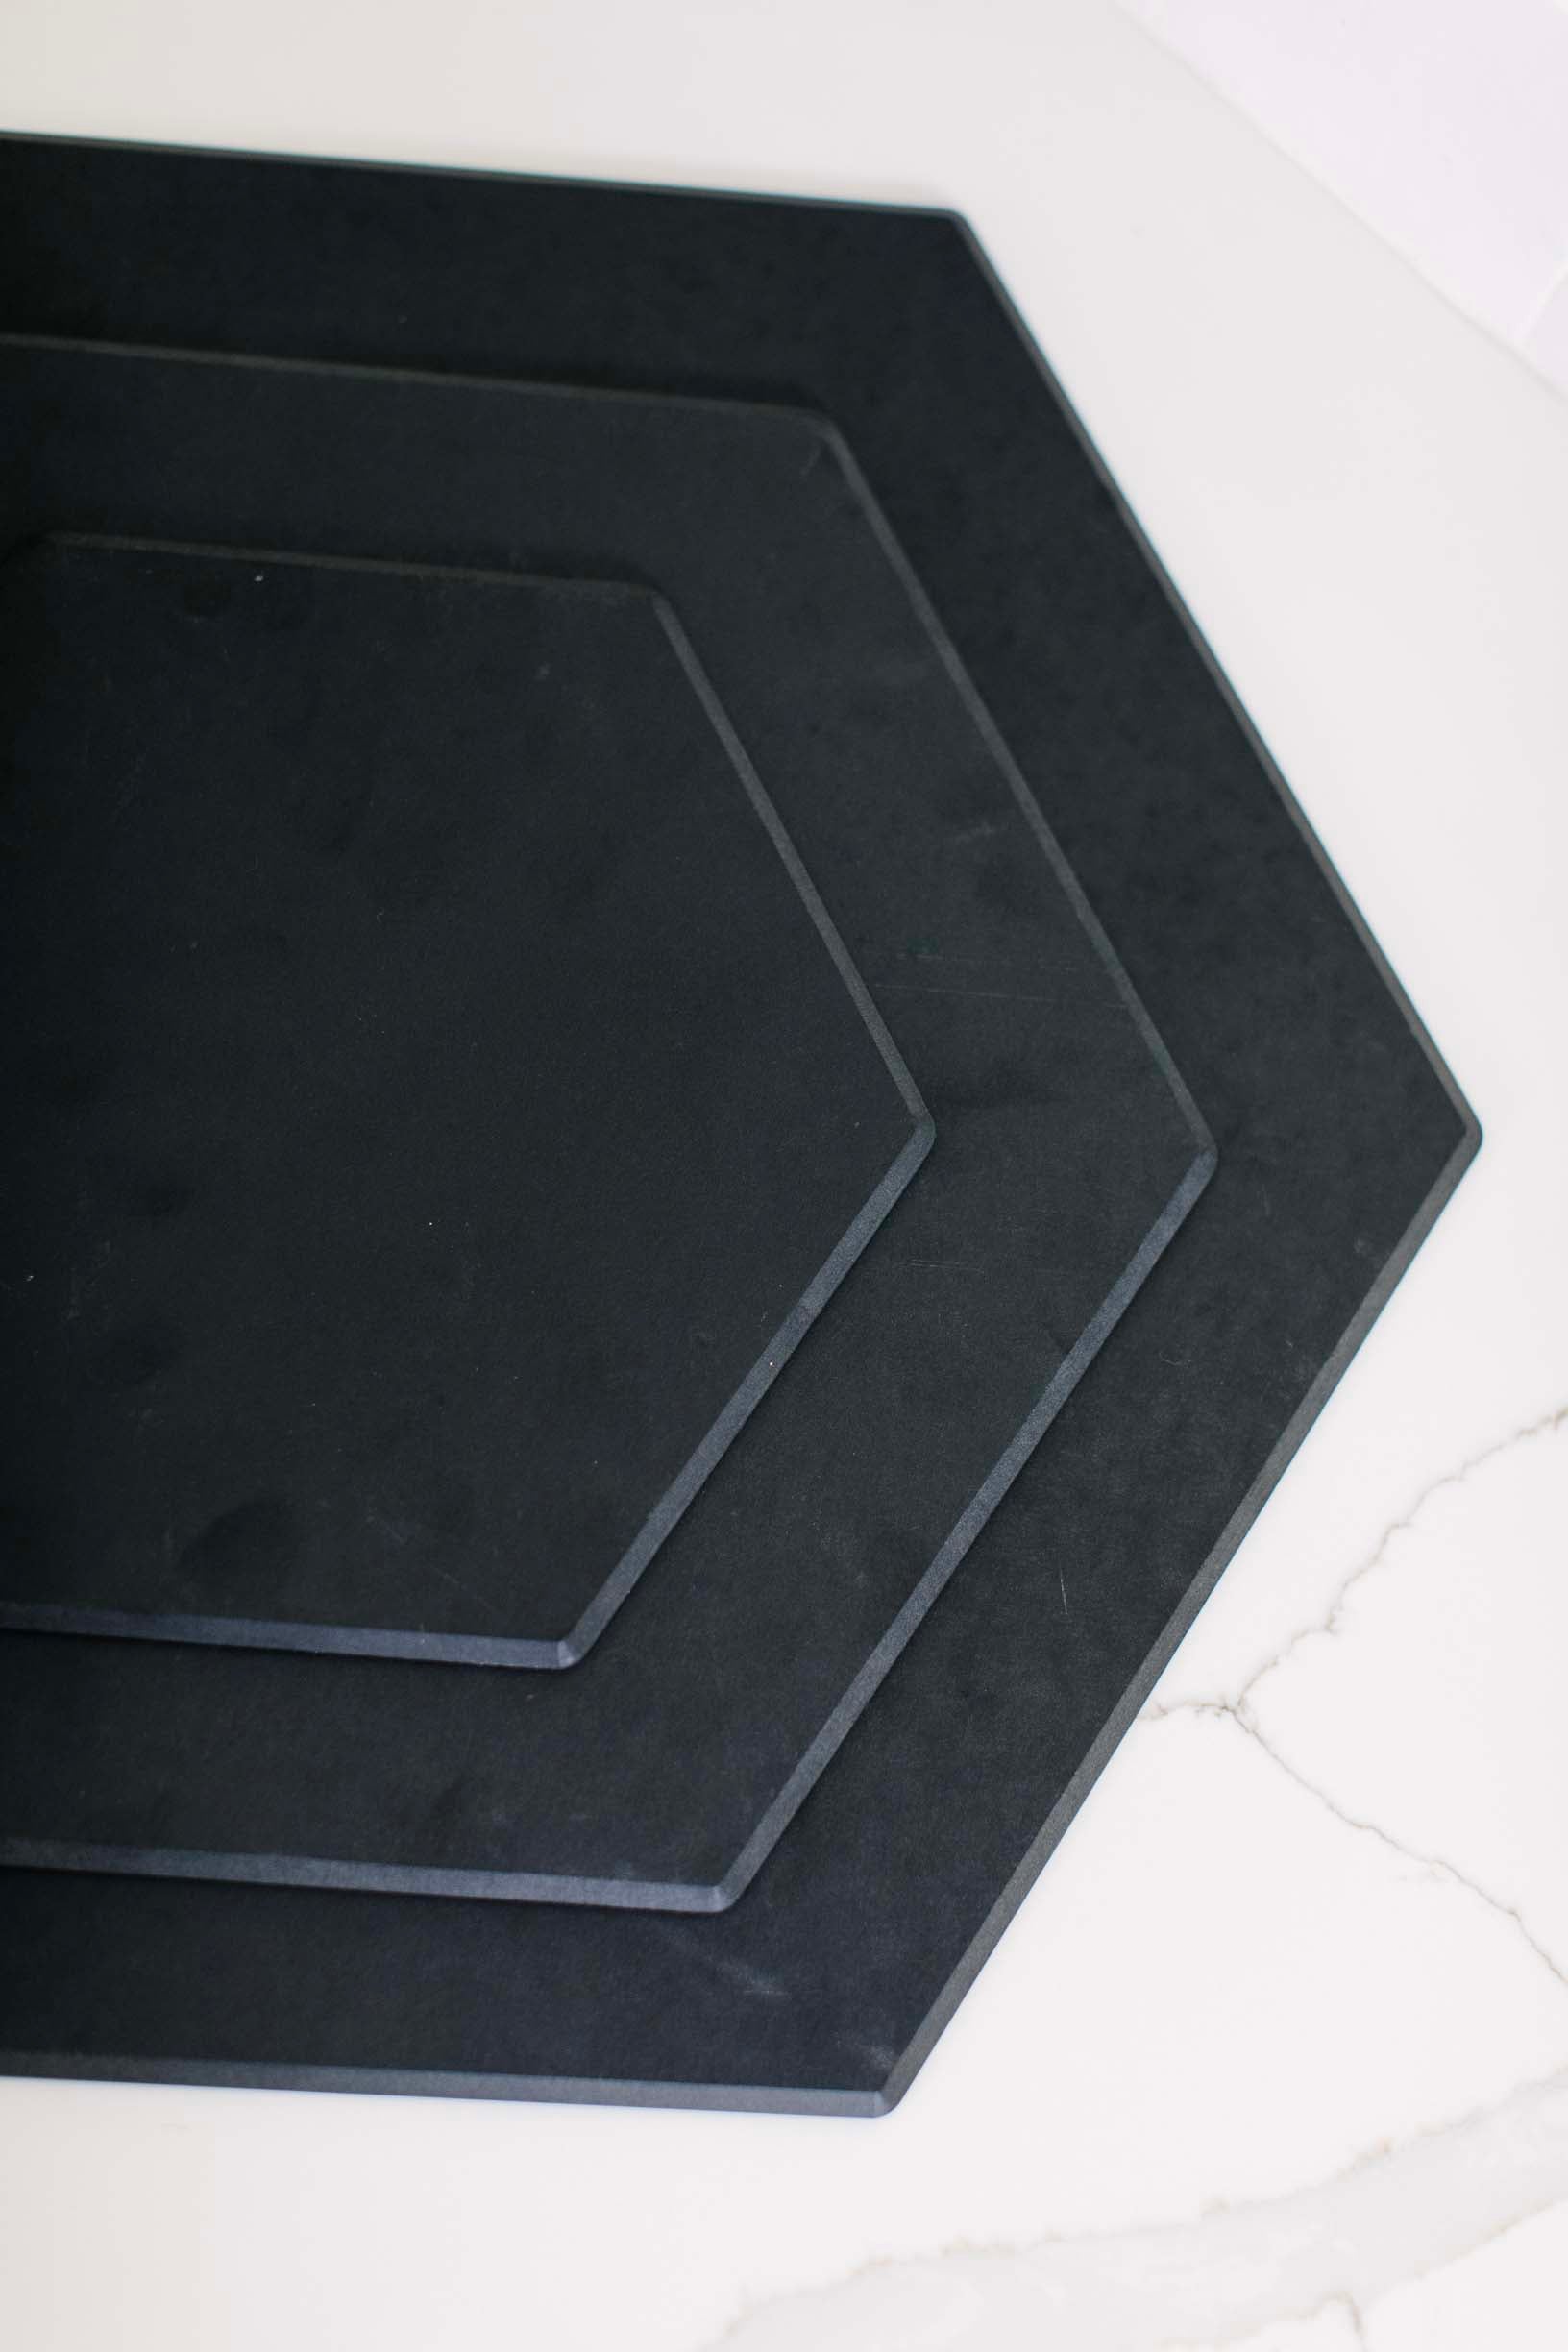 Soren 13"  Hexagon Display/Cutting Board - Slate